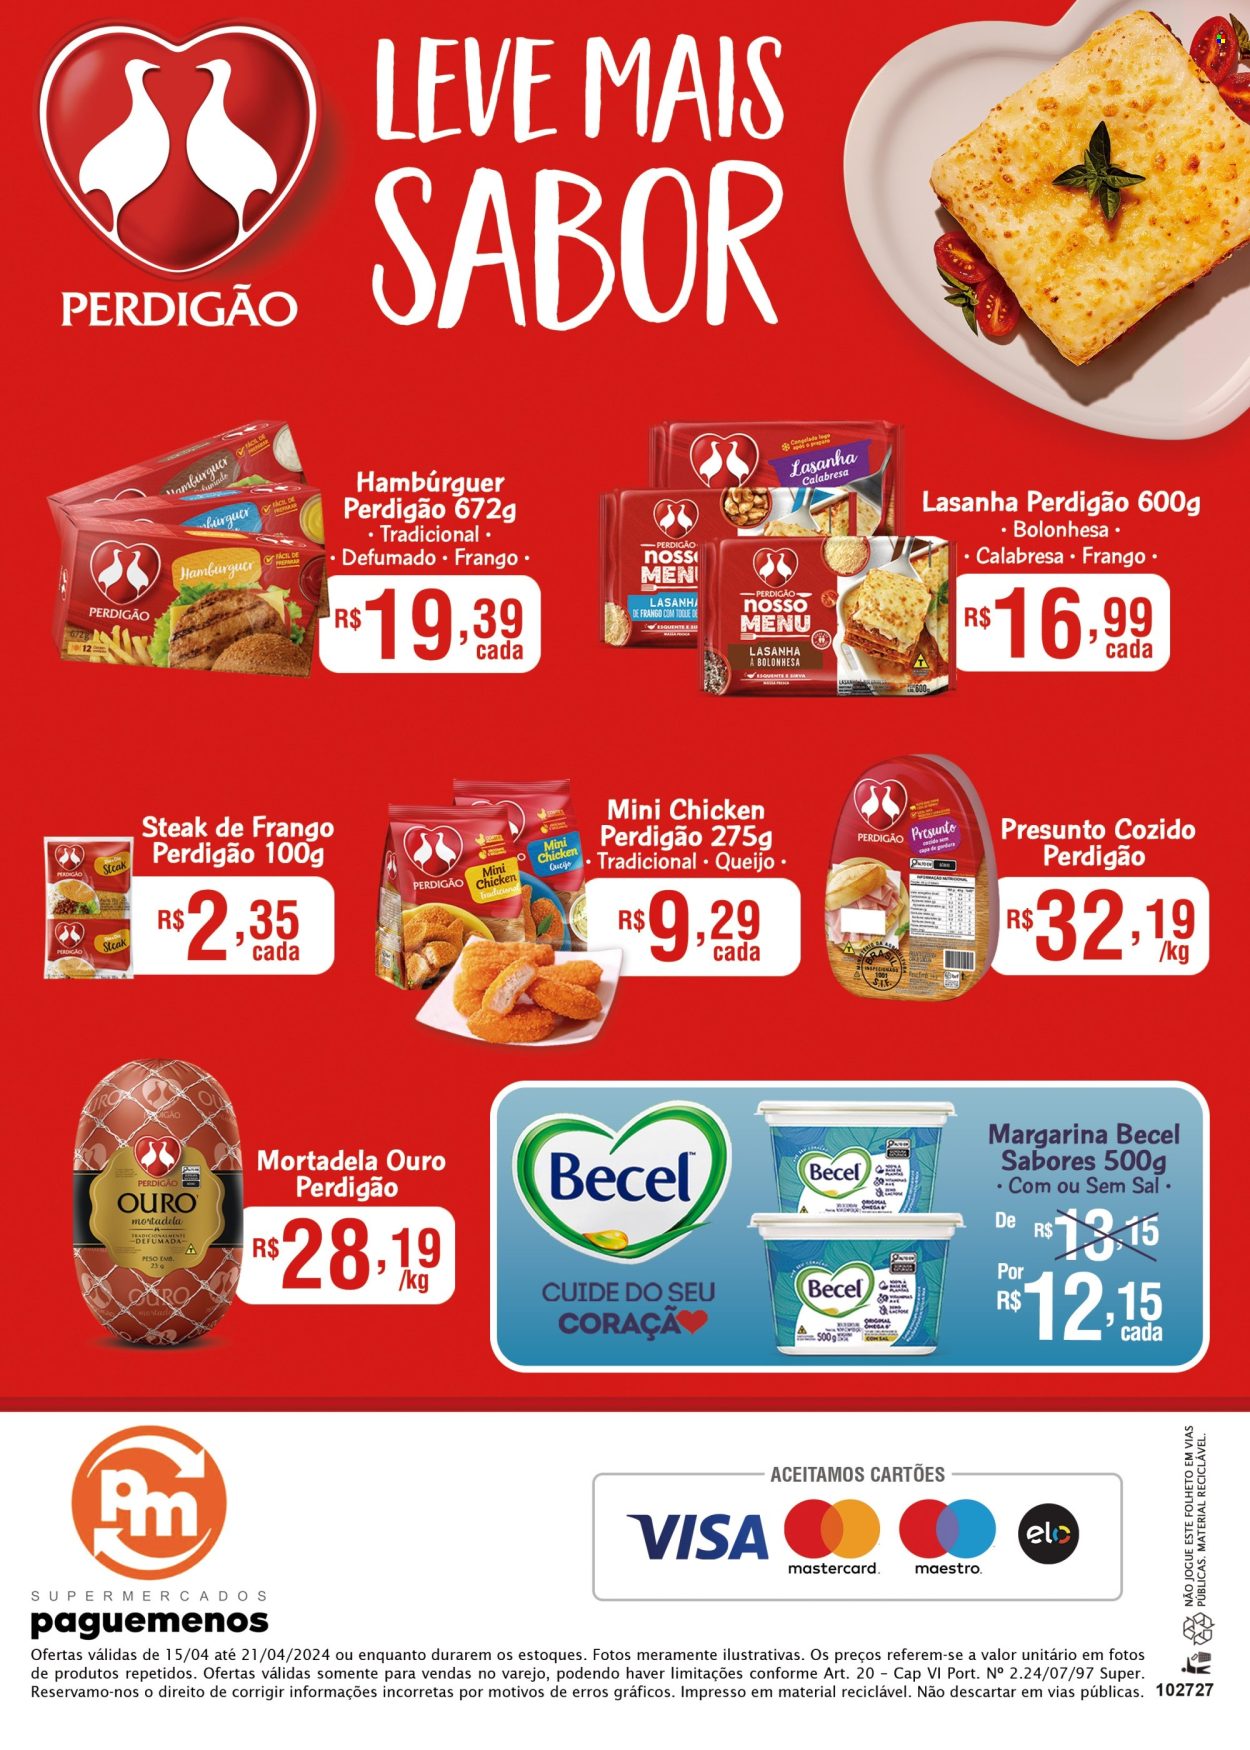 Encarte Supermercados Pague Menos  - 15.04.2024 - 21.04.2024.